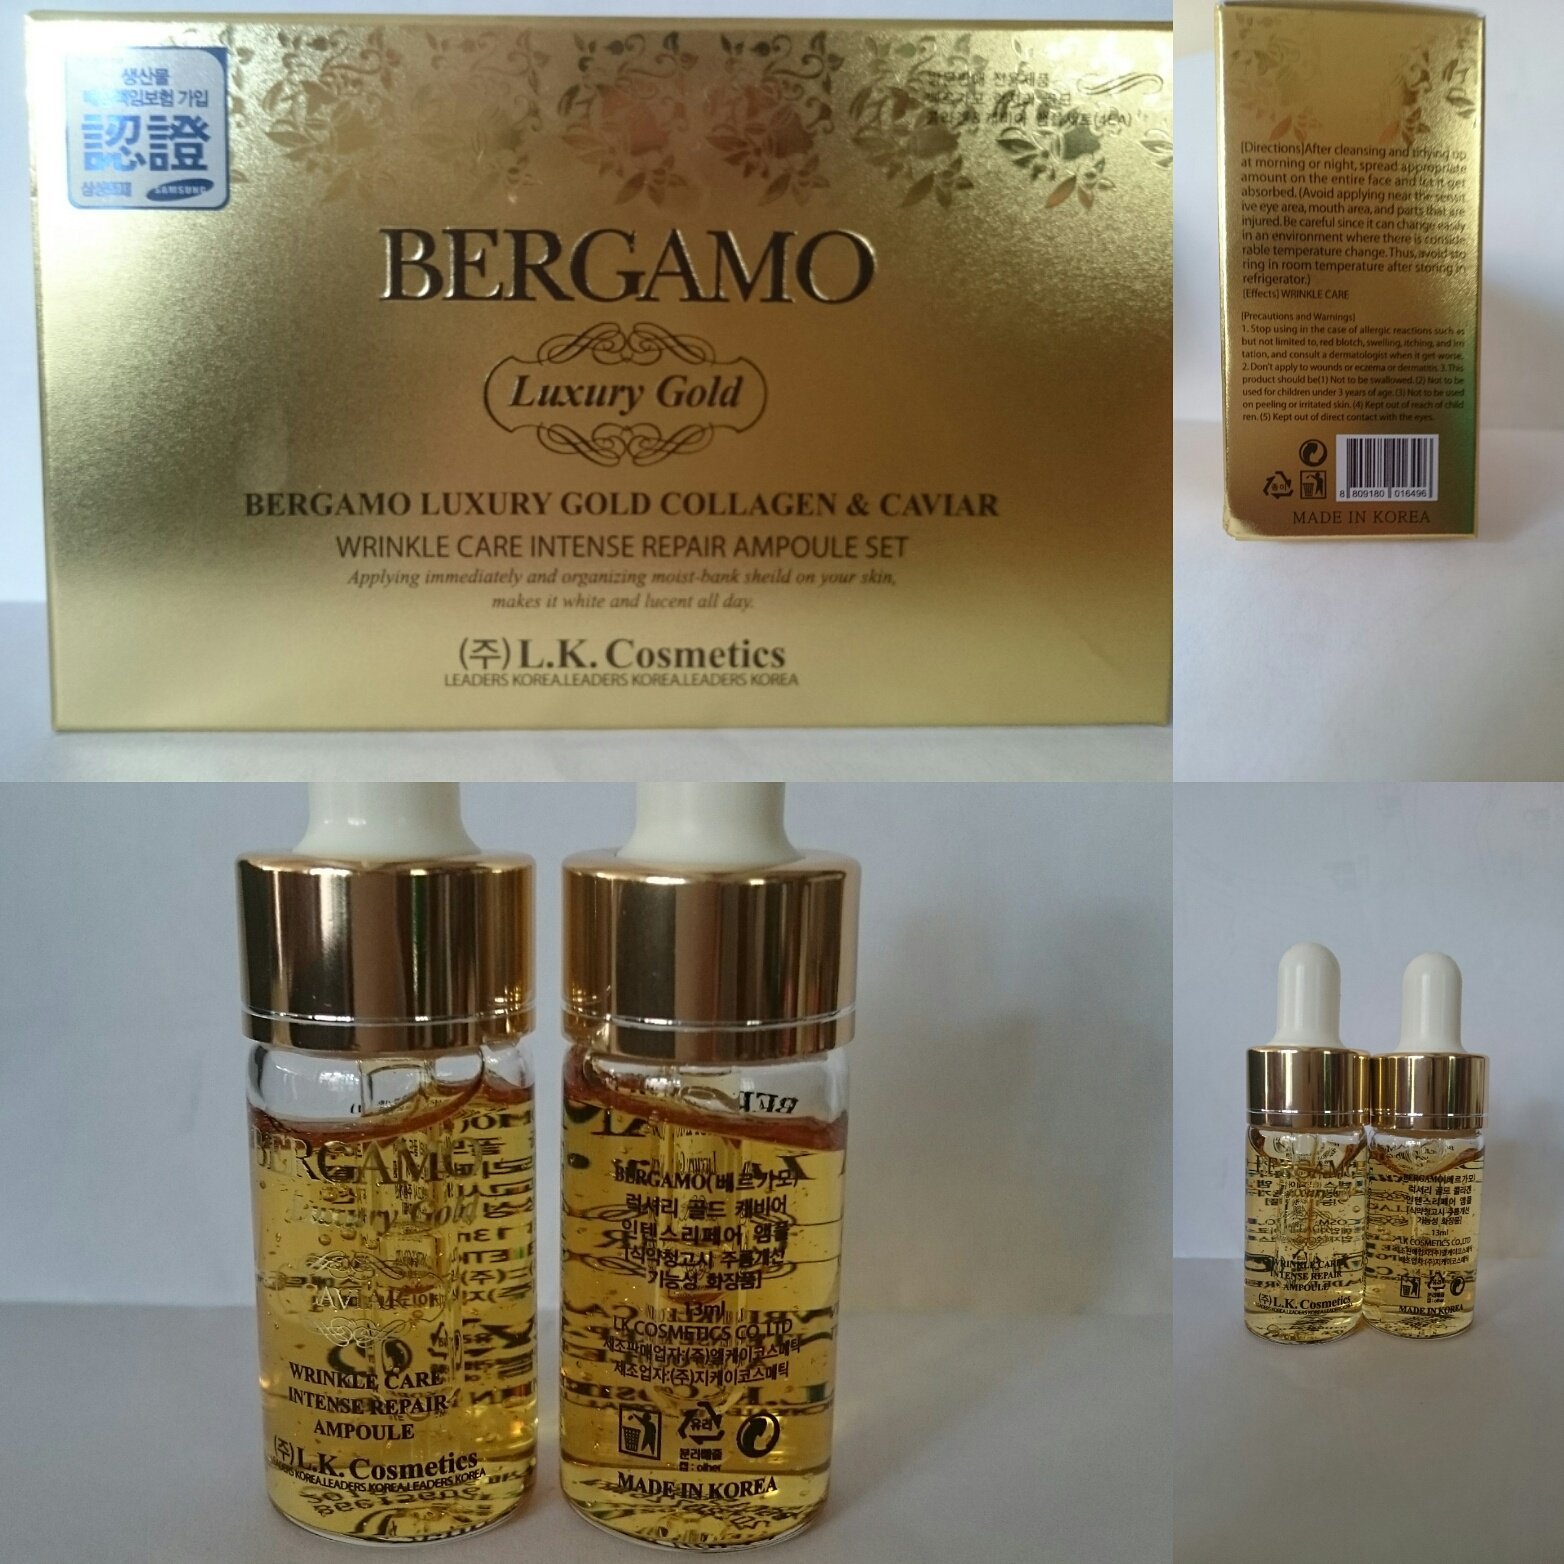 Bergamo Luxury Gold Collagen & Caviar8- bici cosmetics